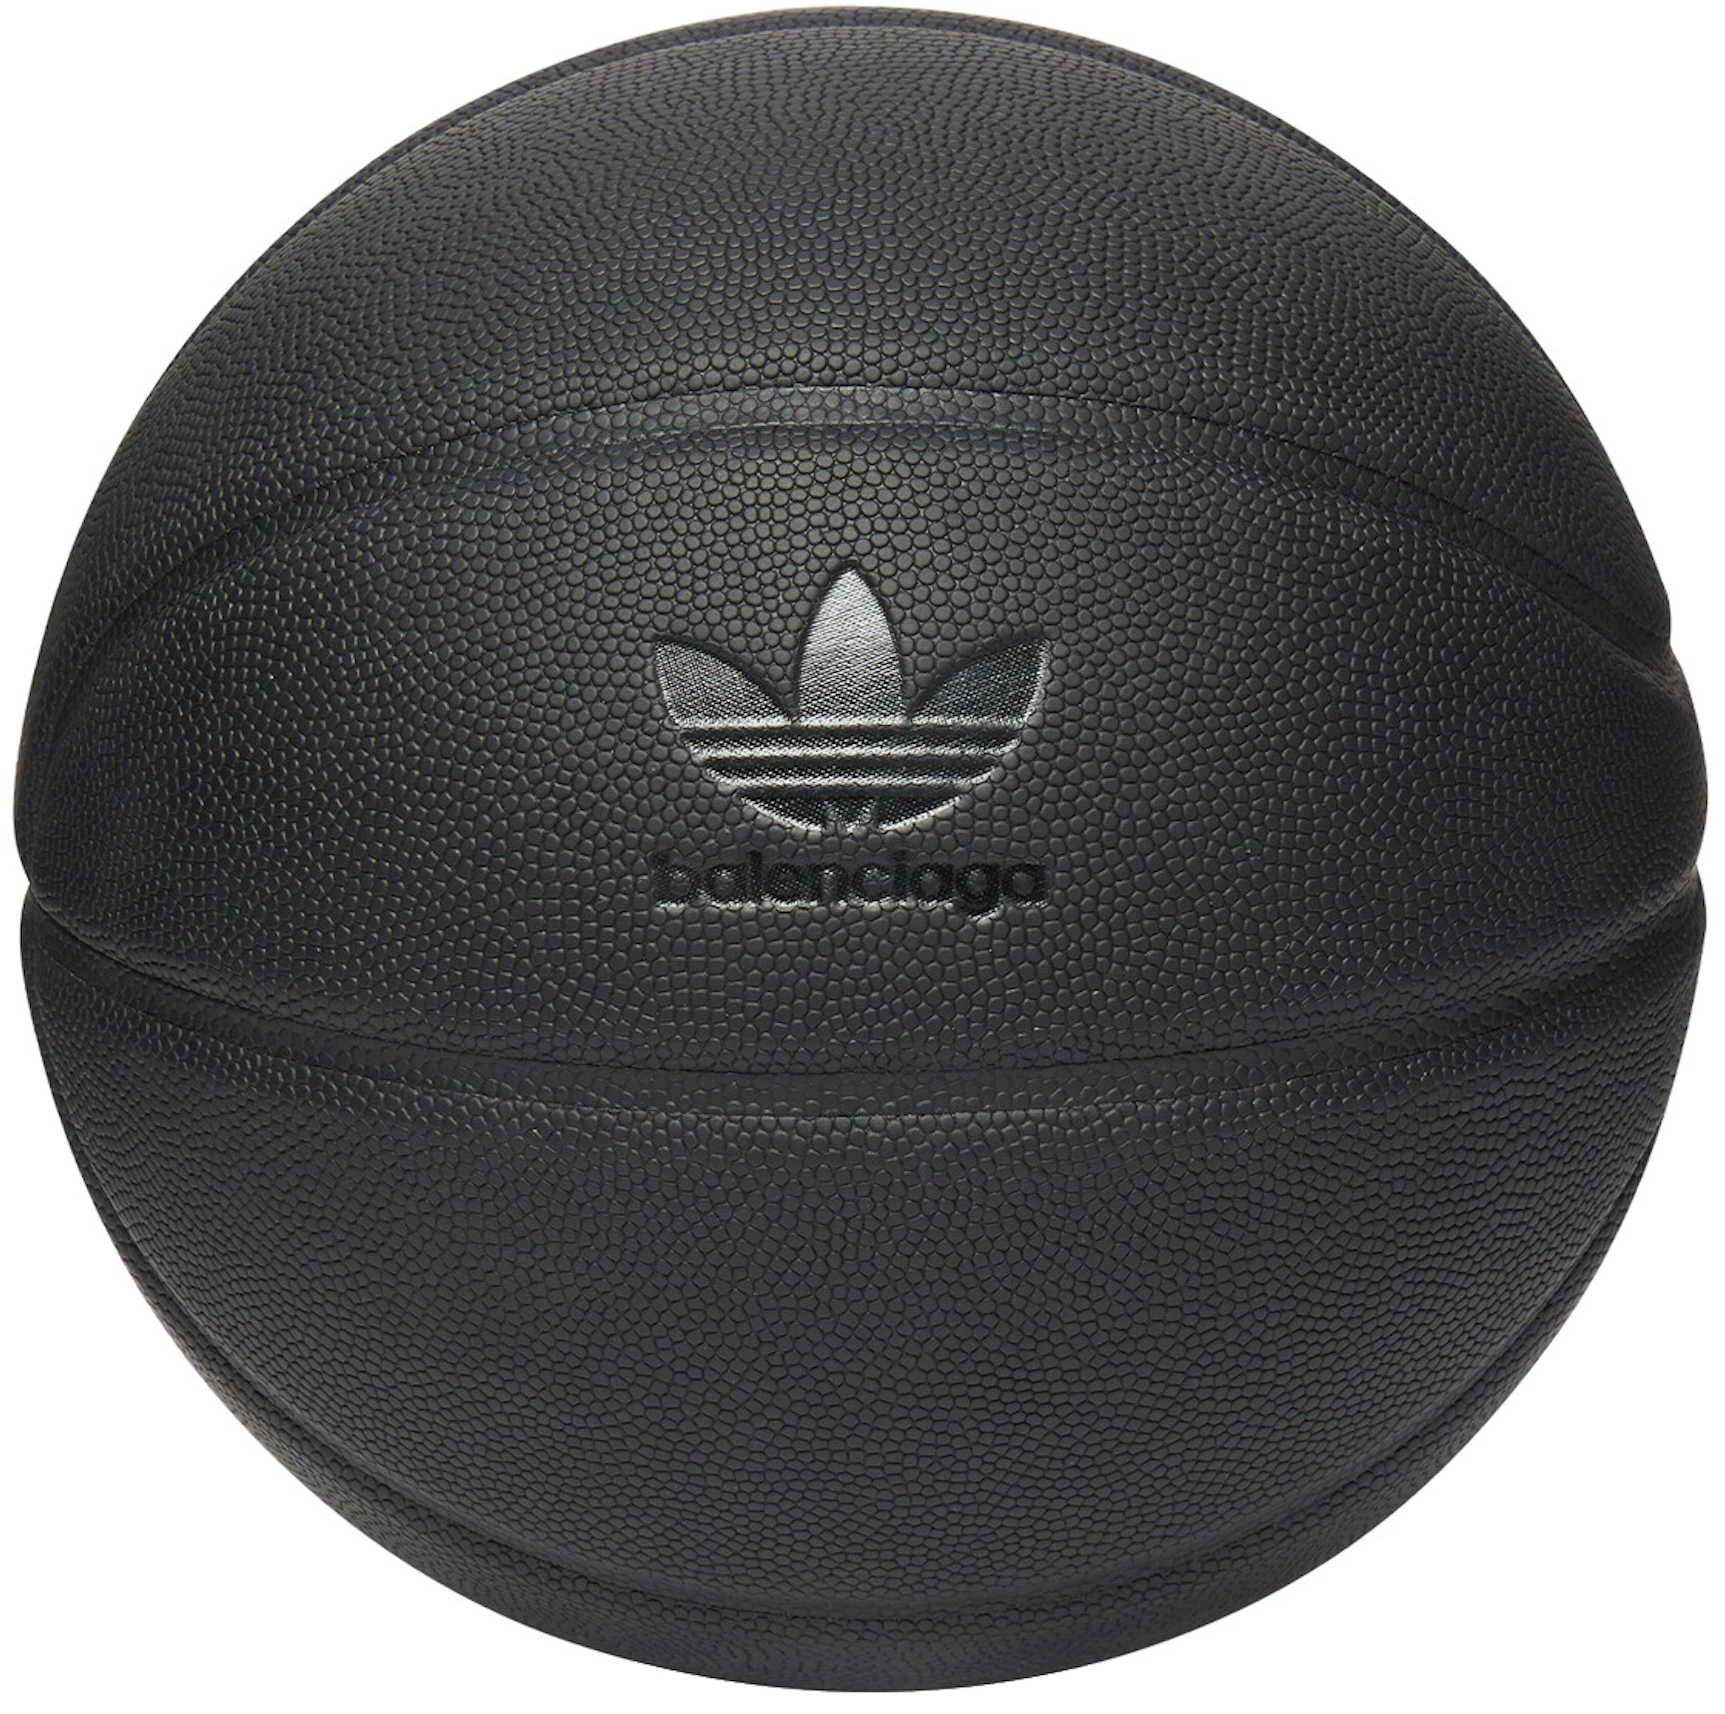 Balenciaga x adidas Basketball Black - FW22 - US